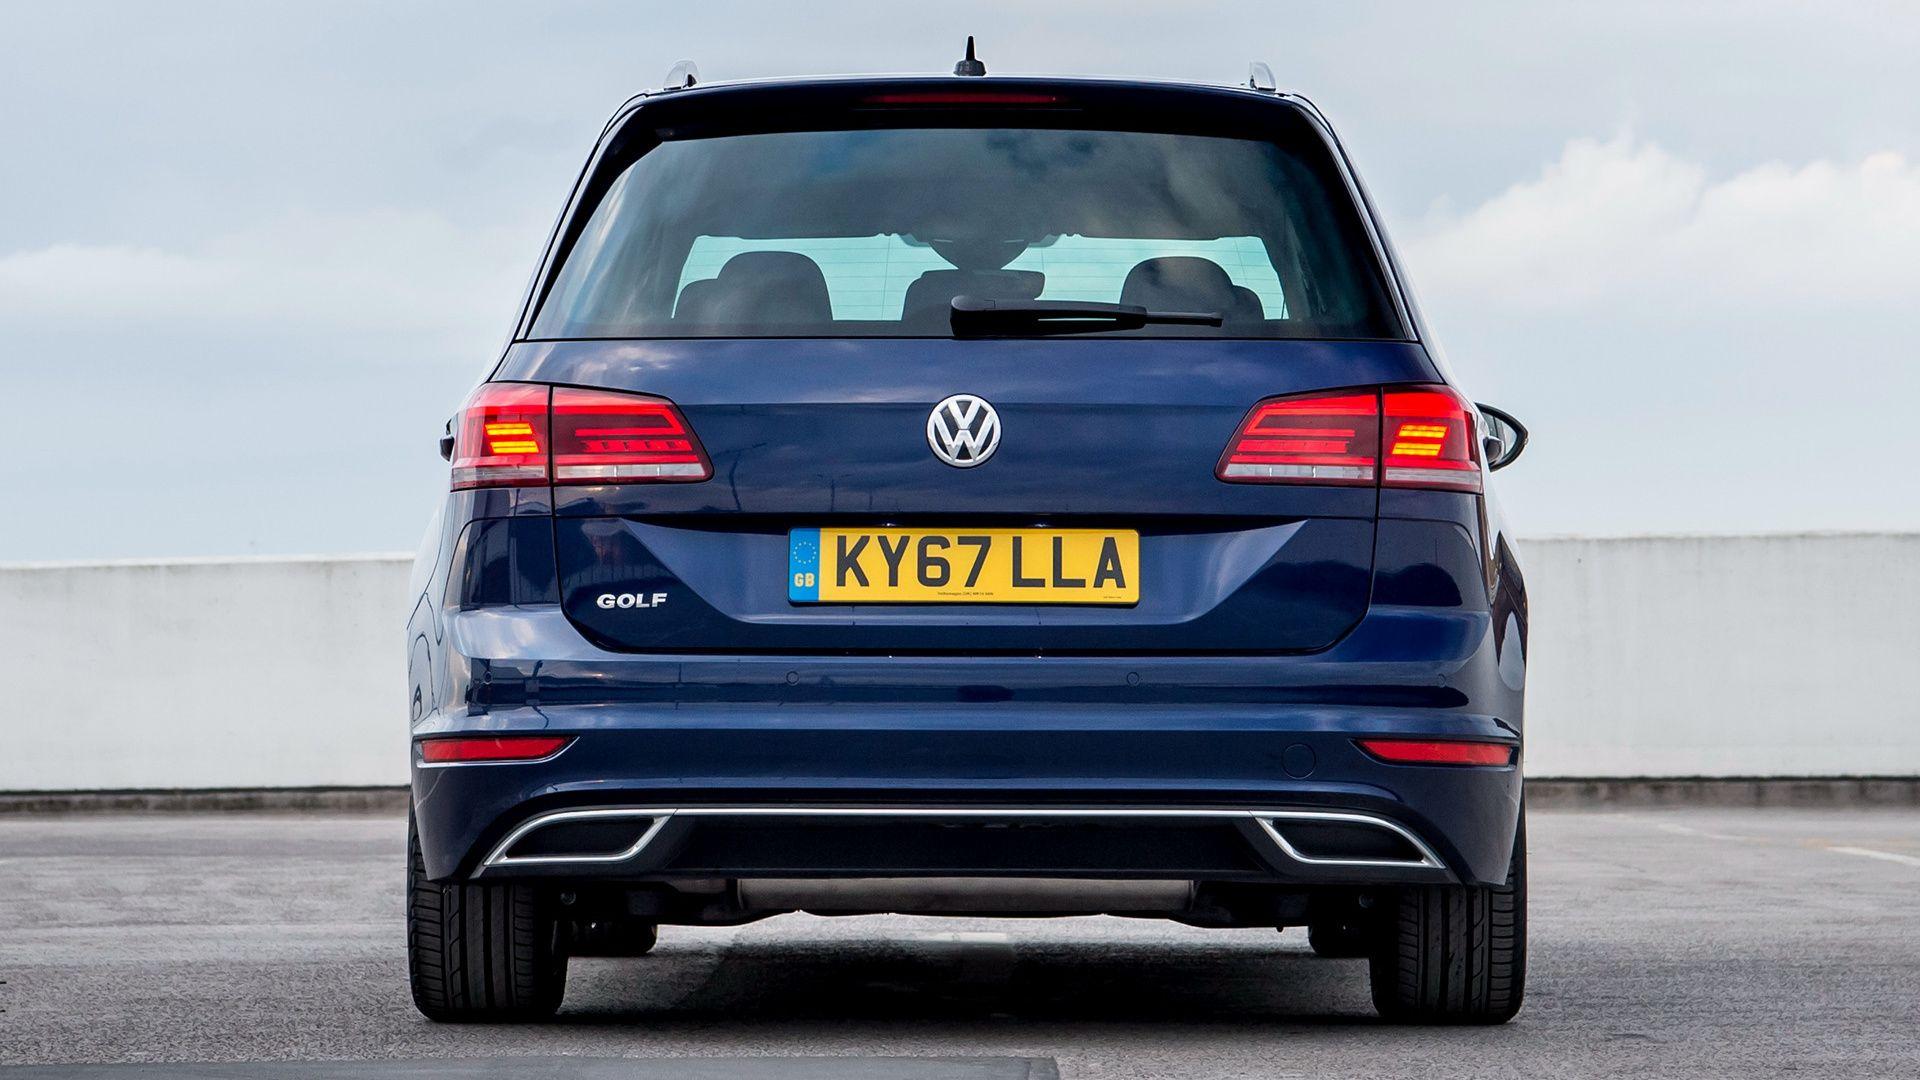 Volkswagen Golf SV (2018) UK Wallpaper and HD Image